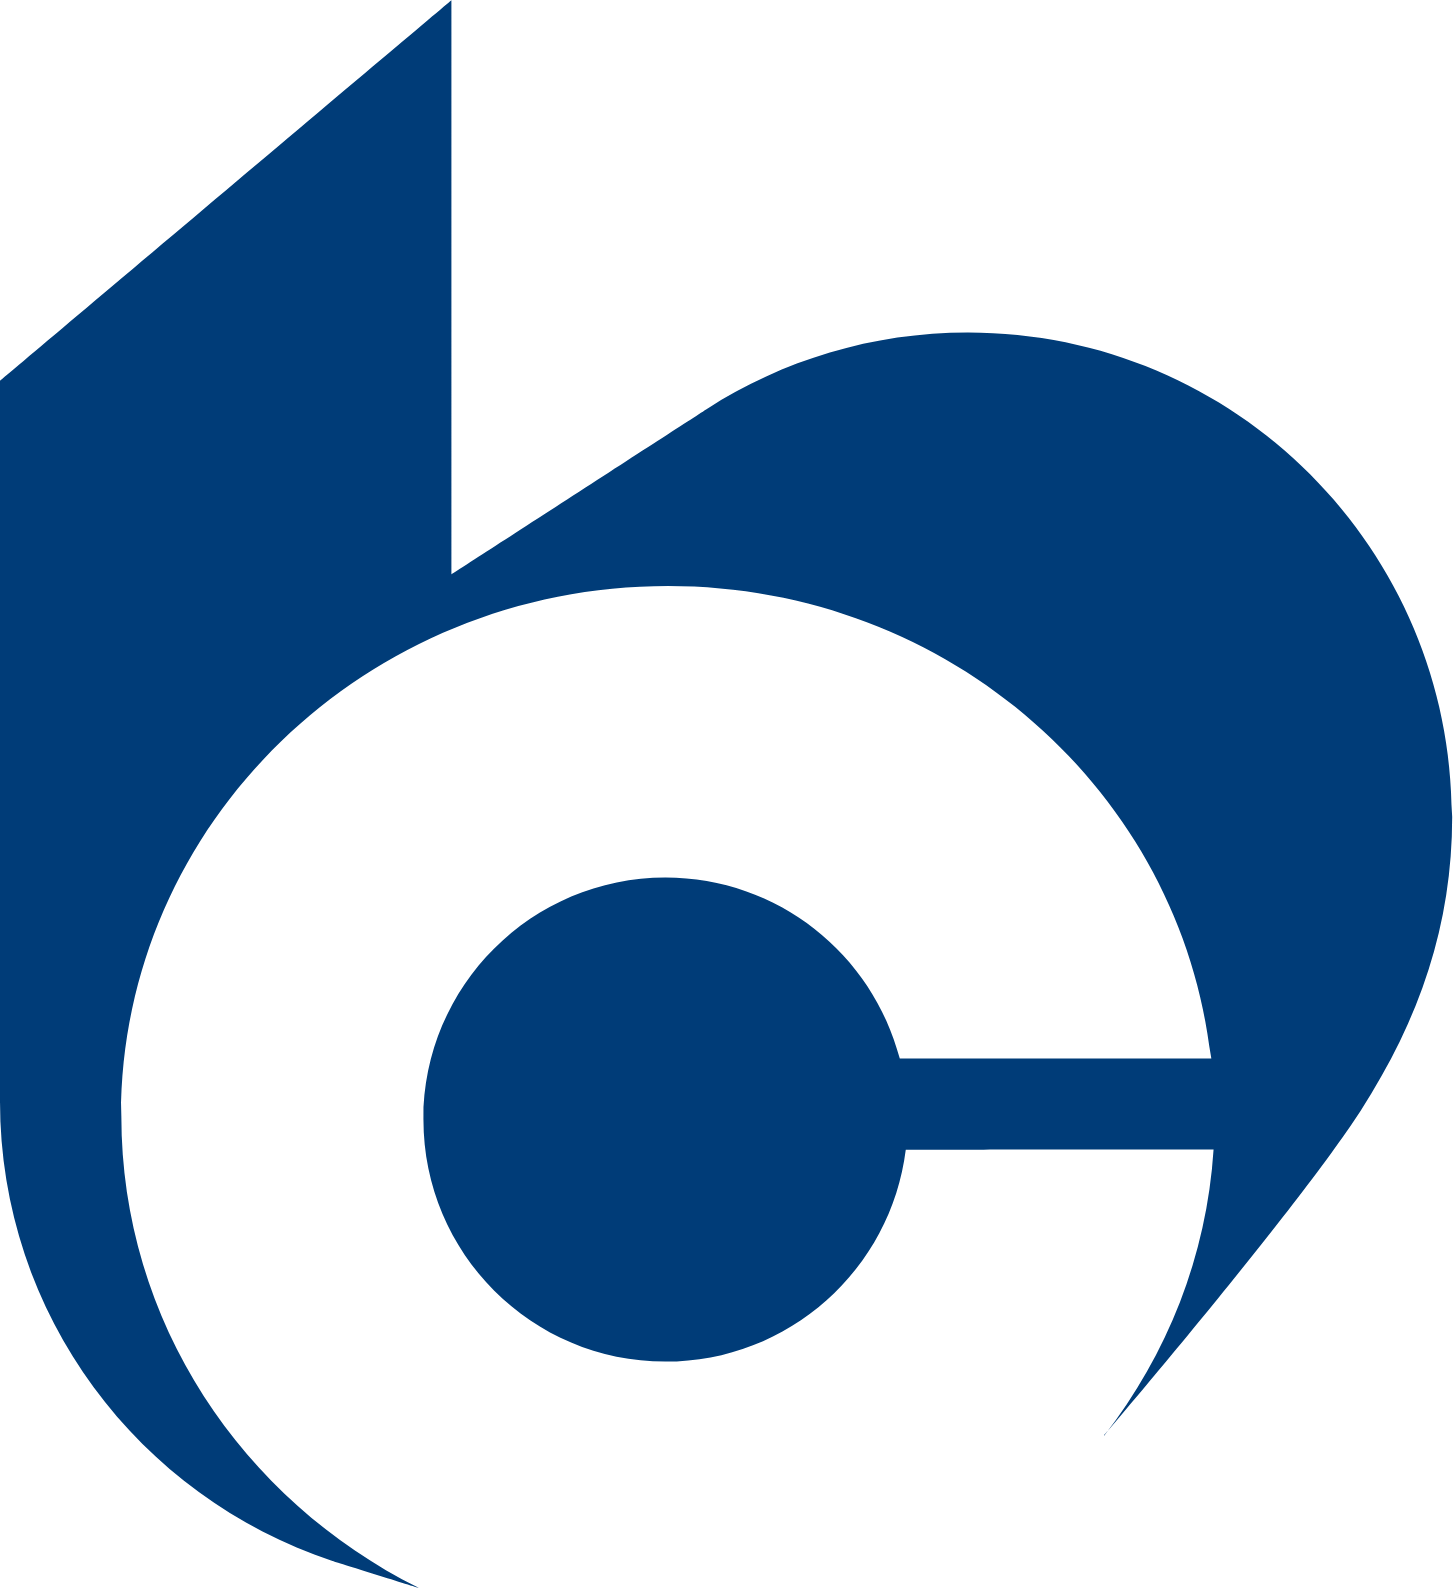 Bank of Communications logo (PNG transparent)